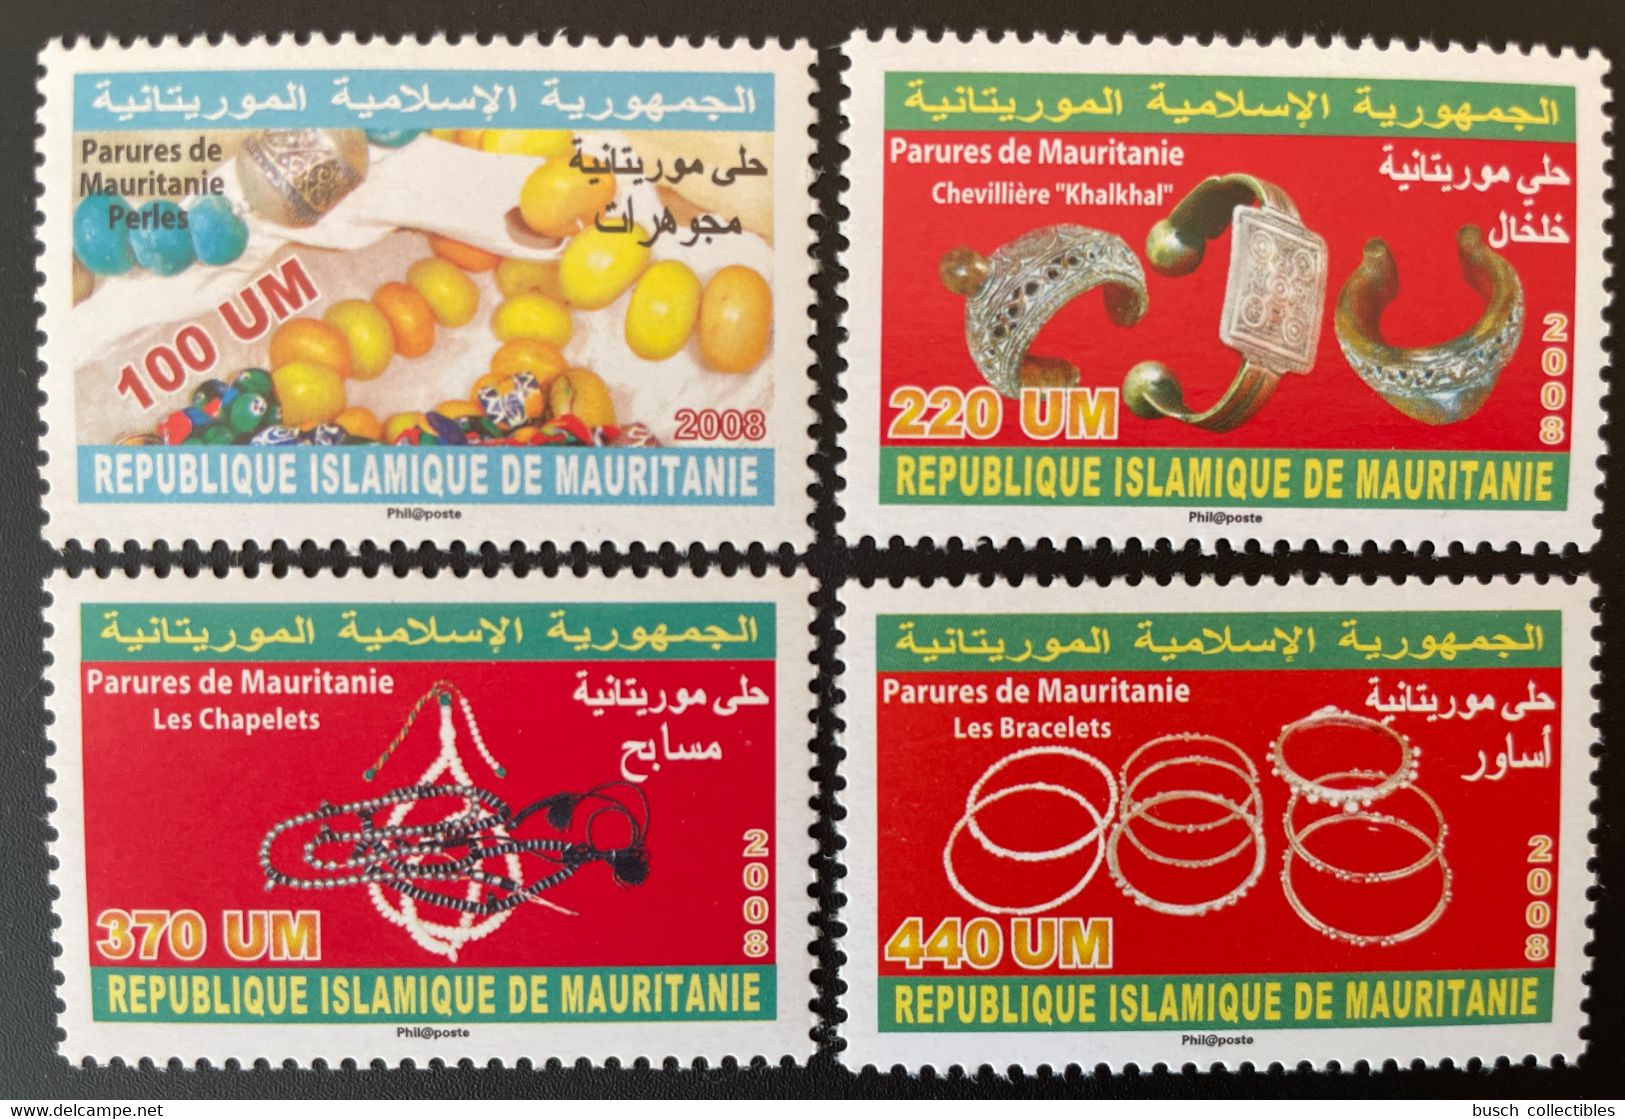 Mauritanie Mauretanien Mauritania 2008 Mi. 1157 - 1160 Parures Perles Bracelets Chapelets Bijoux Schmuck Jewels MNH ** - Mauritania (1960-...)